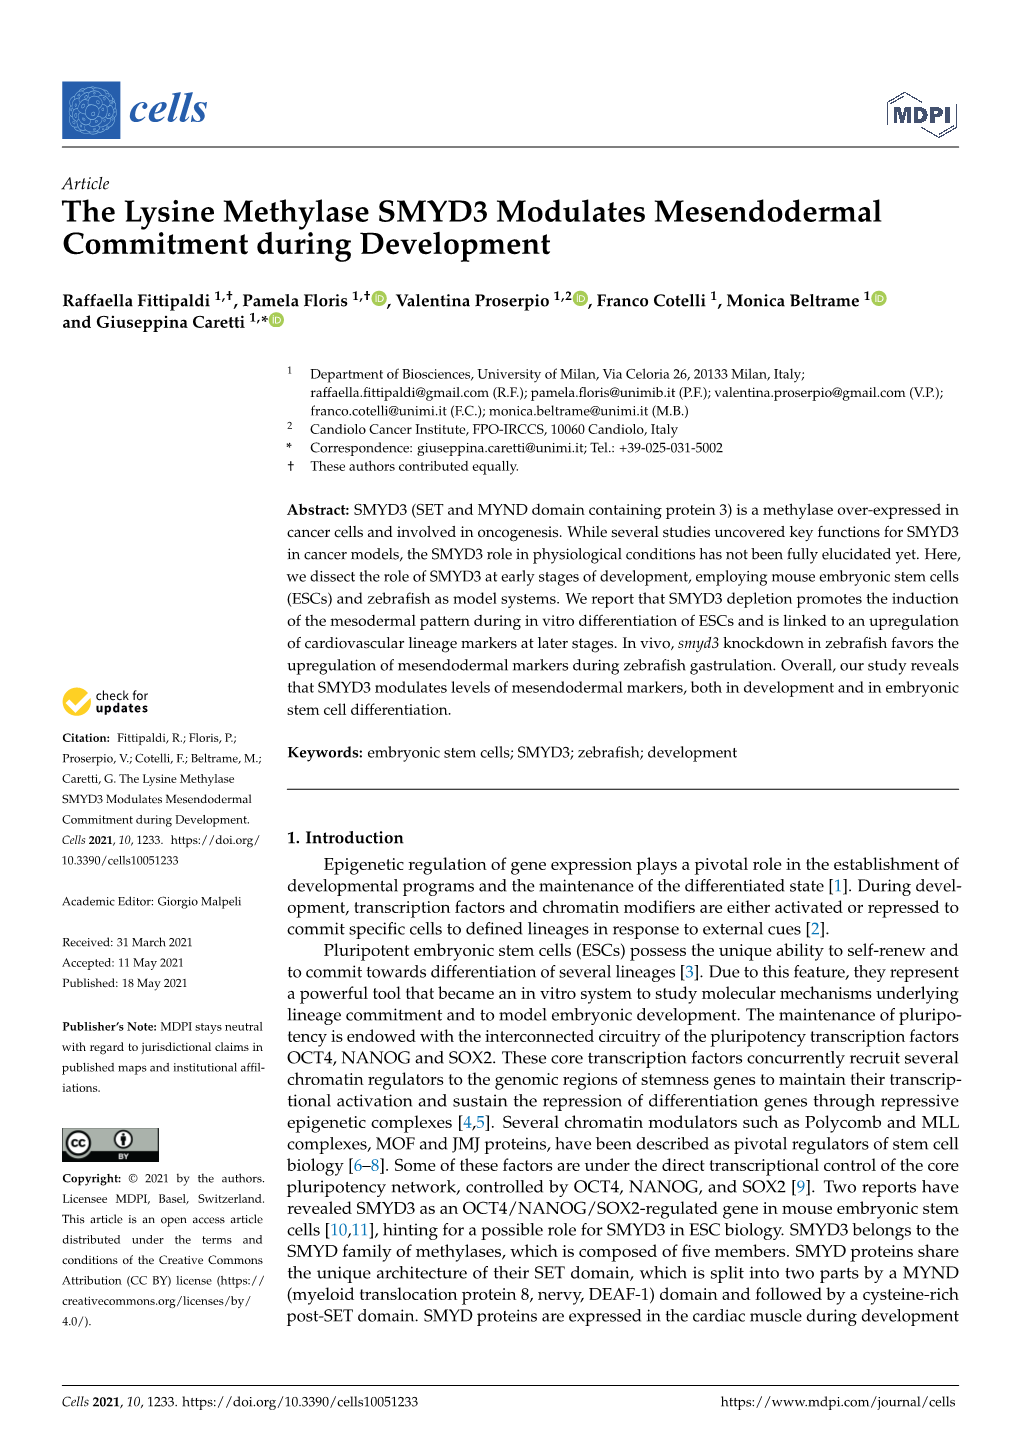 The Lysine Methylase SMYD3 Modulates Mesendodermal Commitment During Development